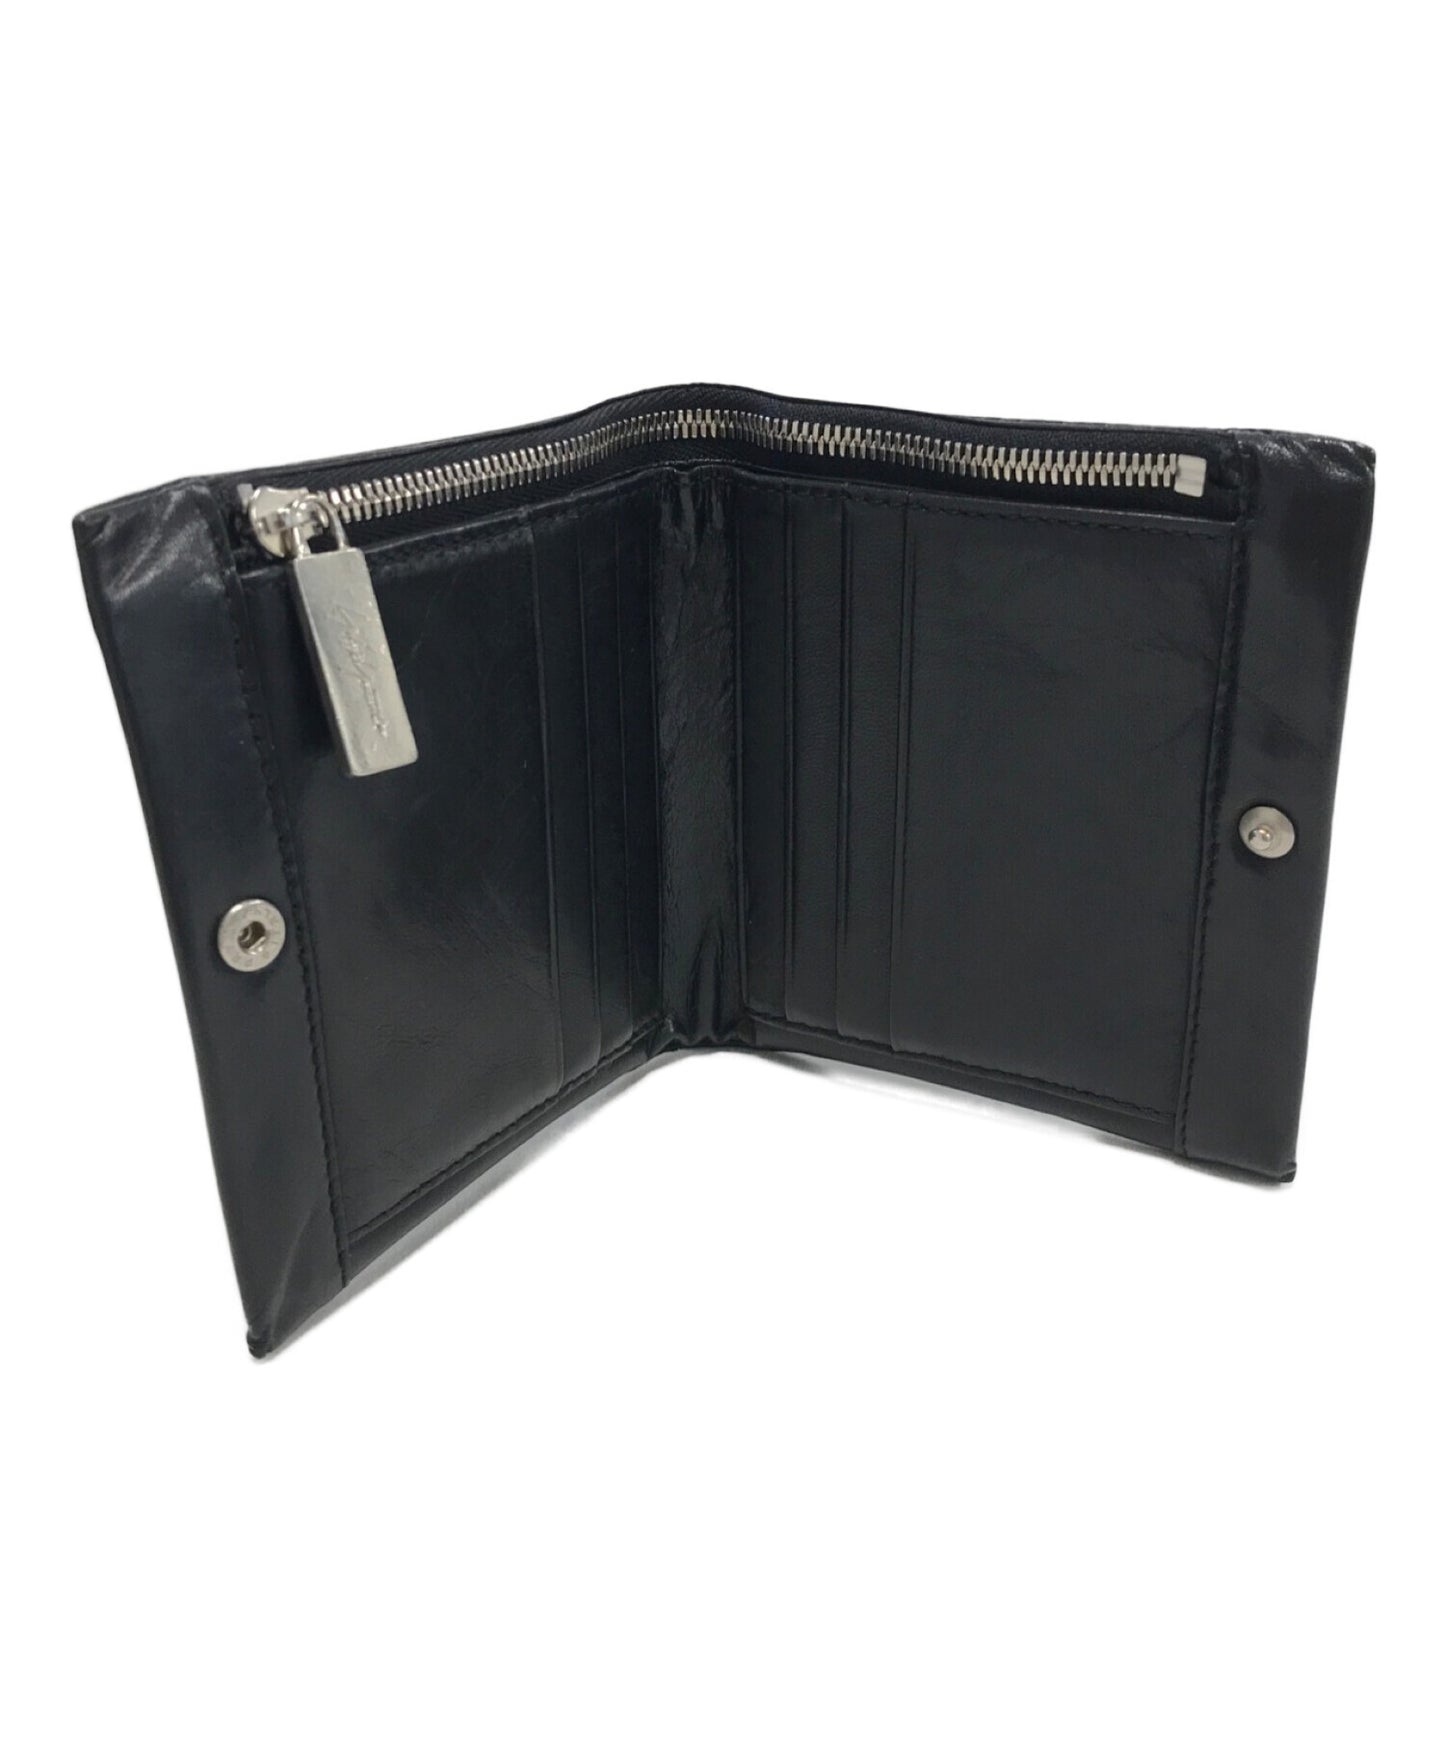 Yohji Yamamoto Bi-fold Wallet